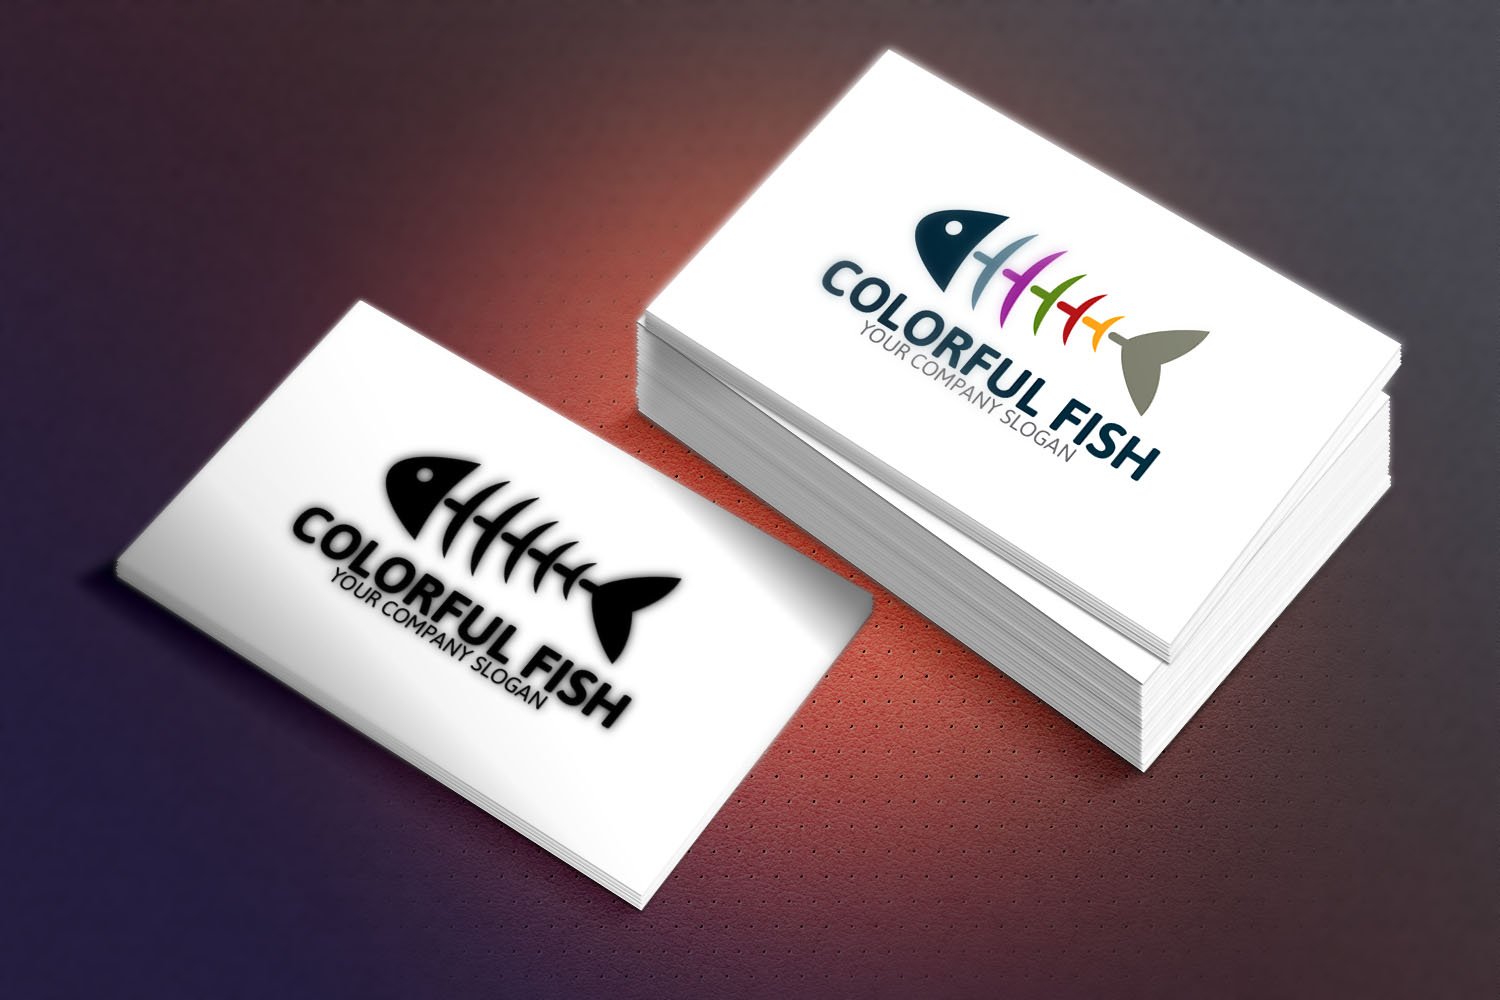 fish logo template.